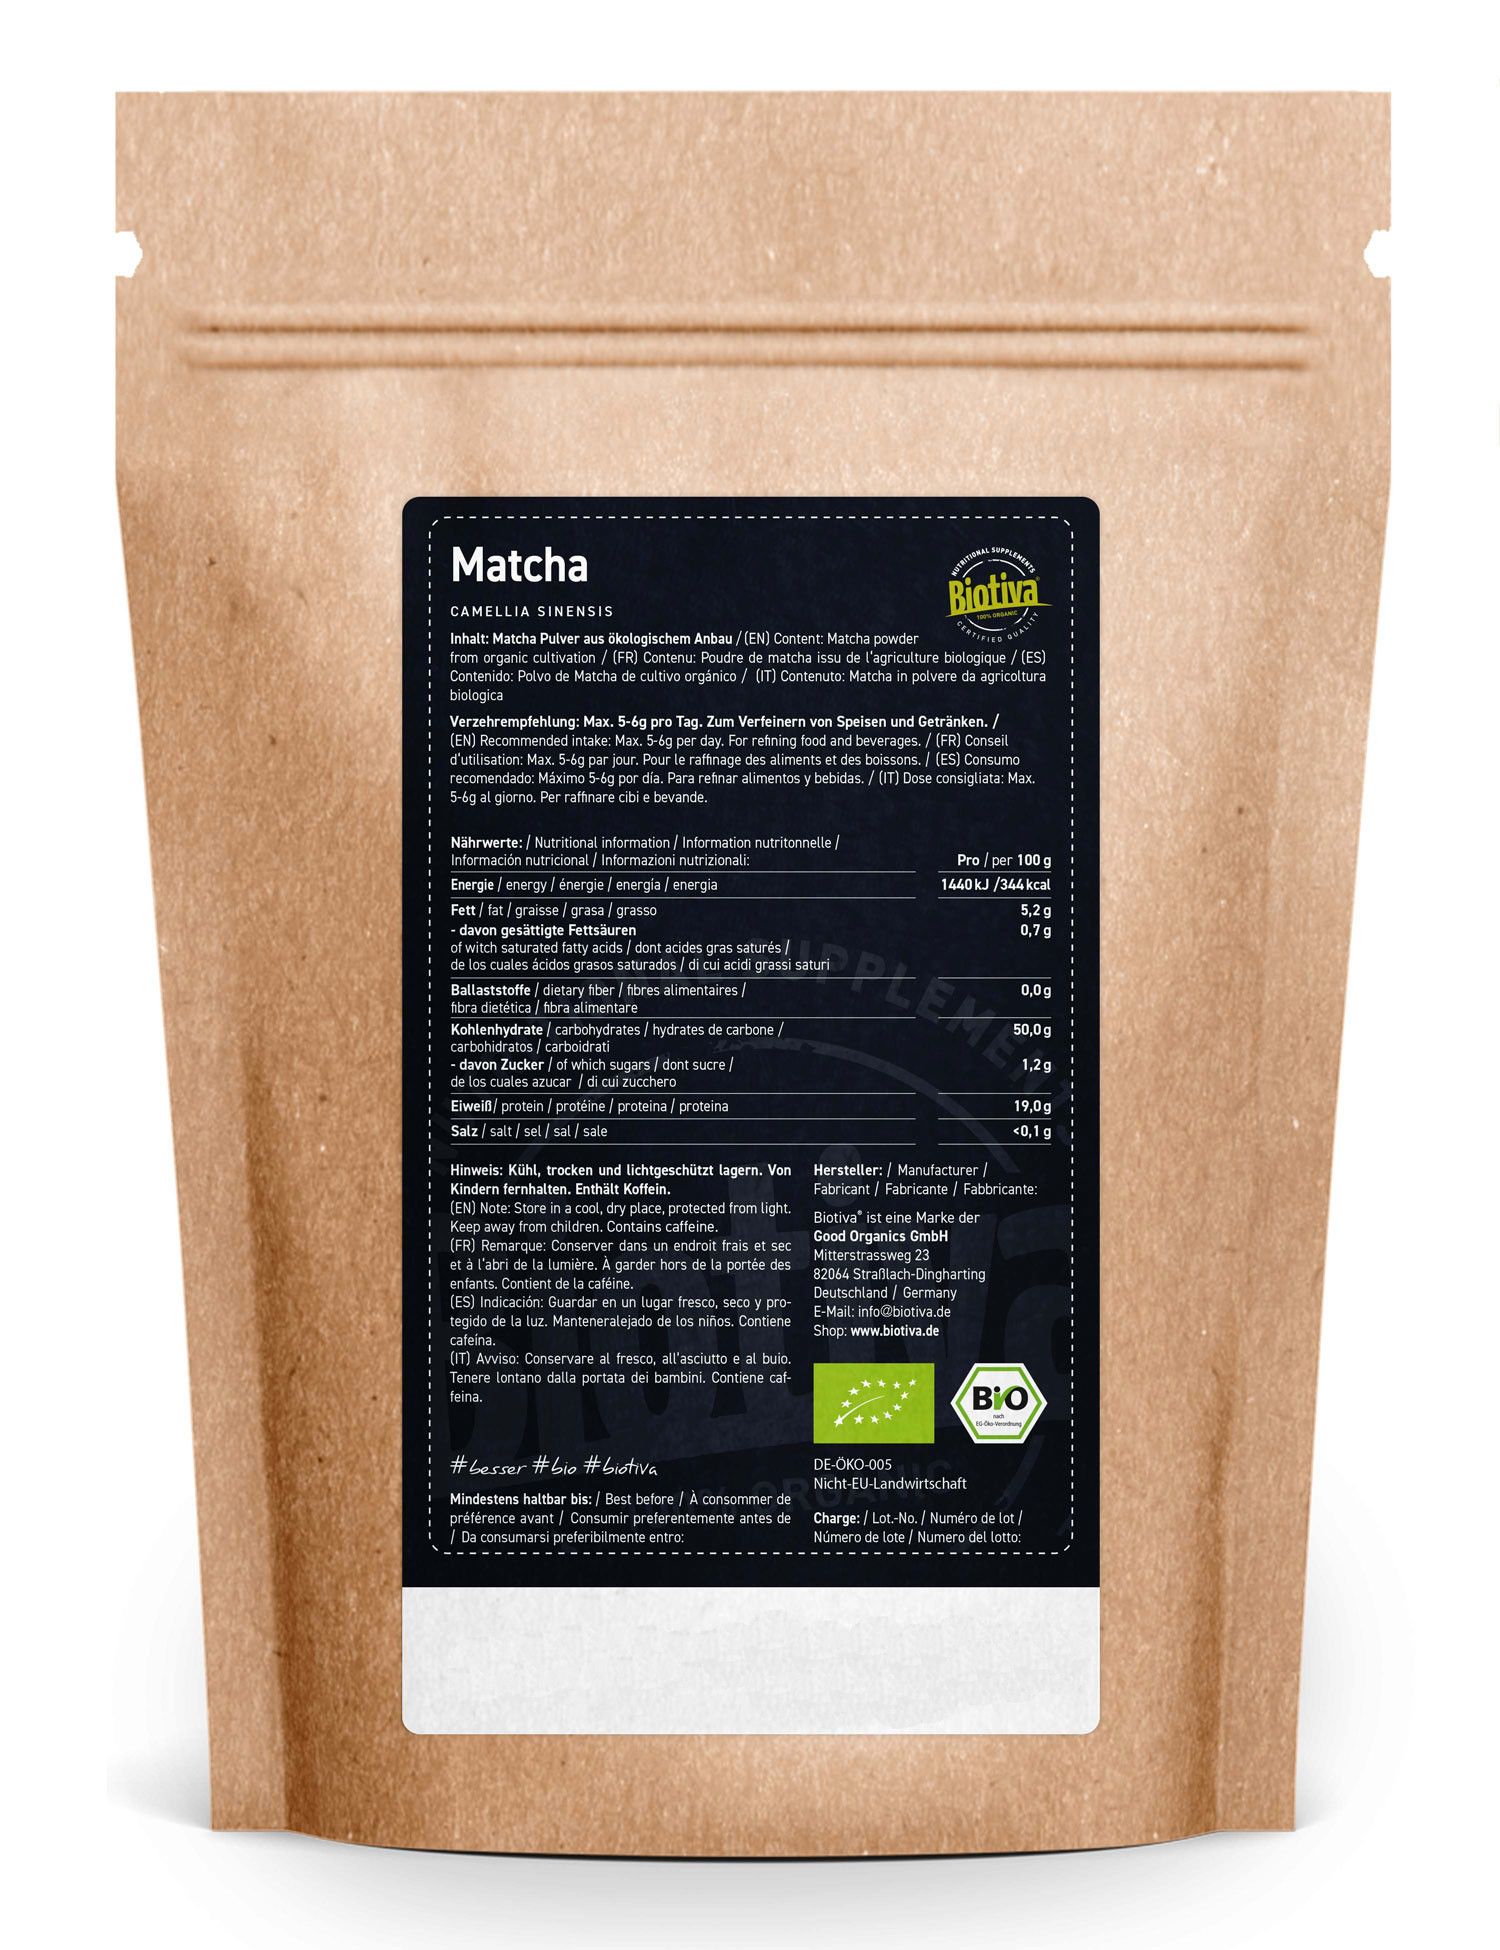 Biotiva Matcha Tee Bio